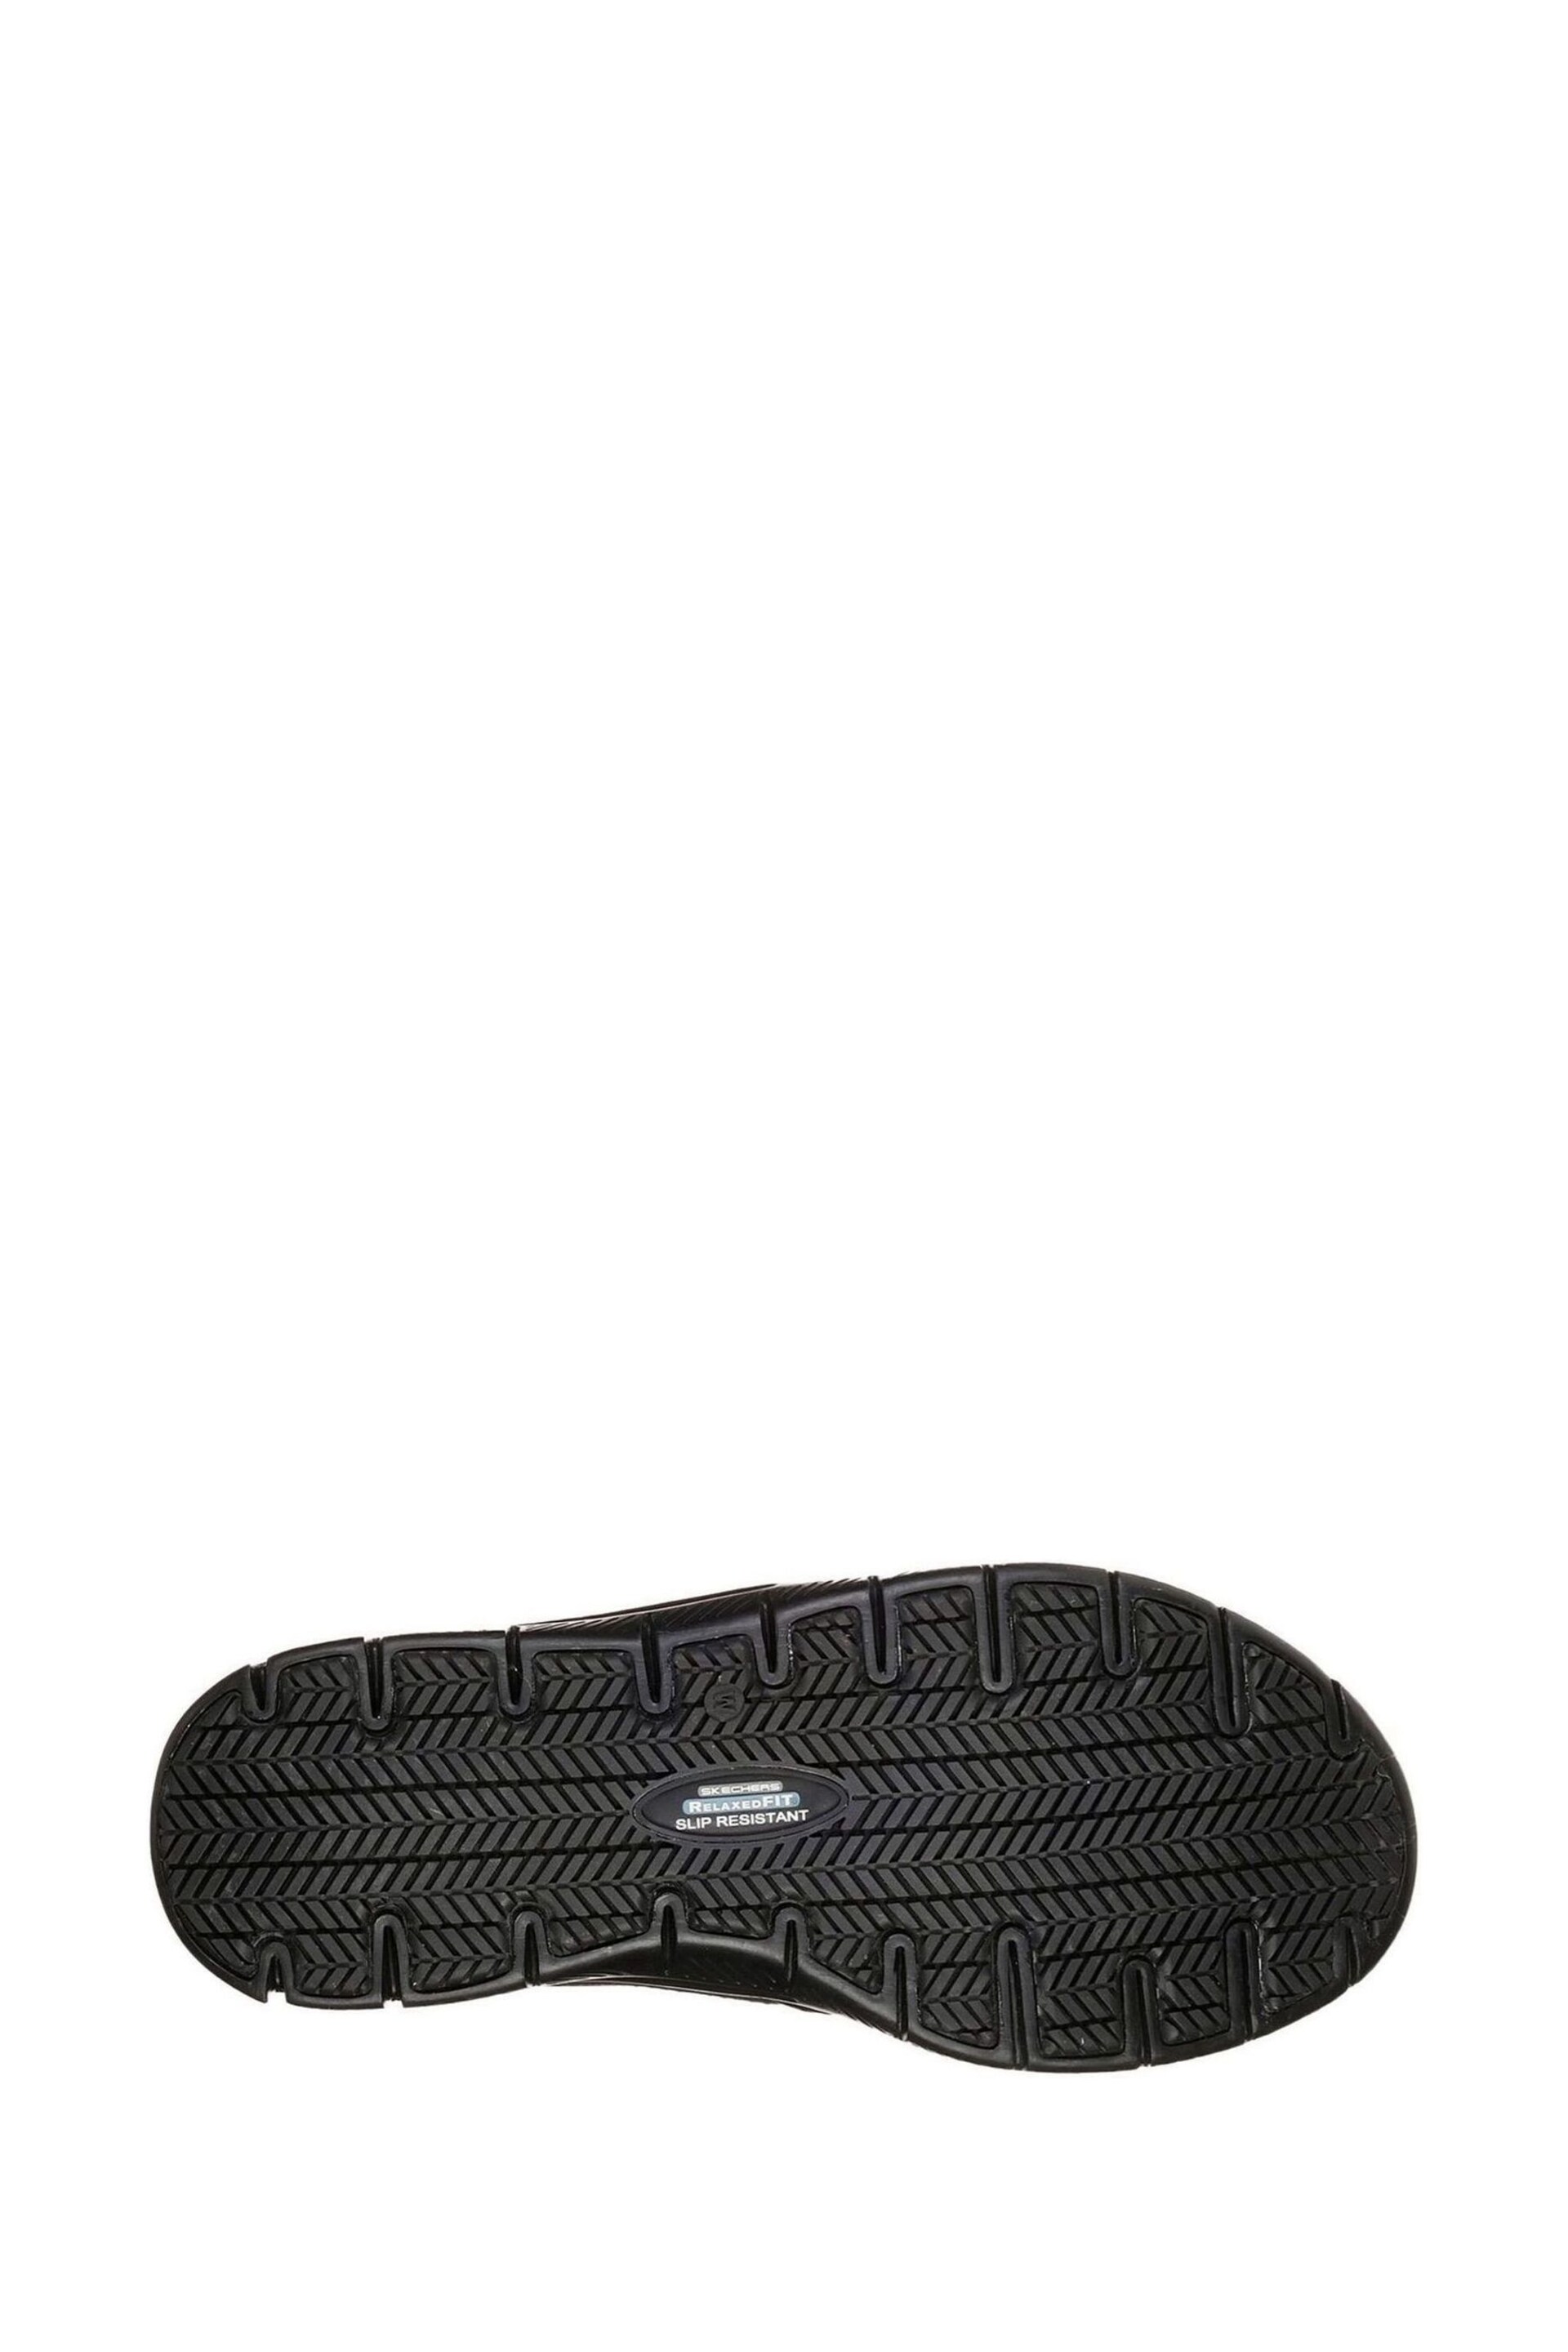 Skechers Black Cozard Slip-On Slip Resistant Work Womens Shoes - Image 3 of 3